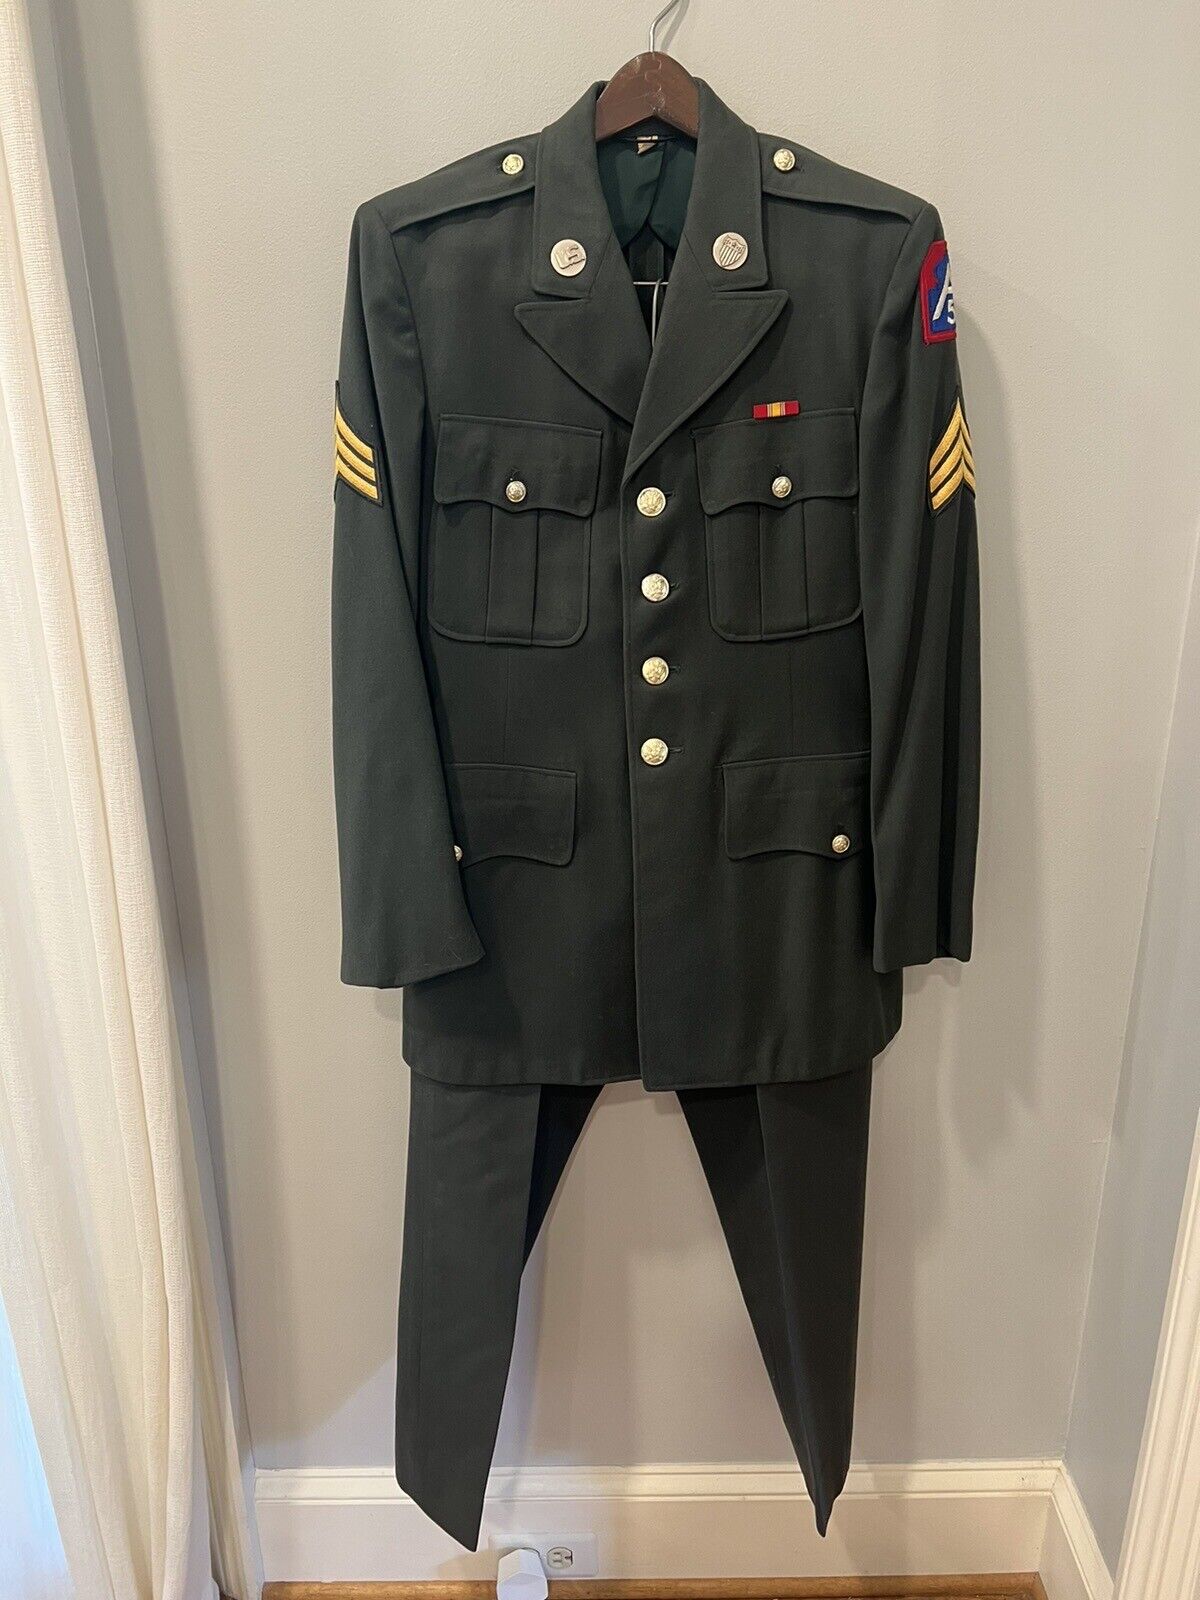 Vintage 1957 Vietnam Era US 5th Army Uniform Dress Greens Jacket & Pants 37R